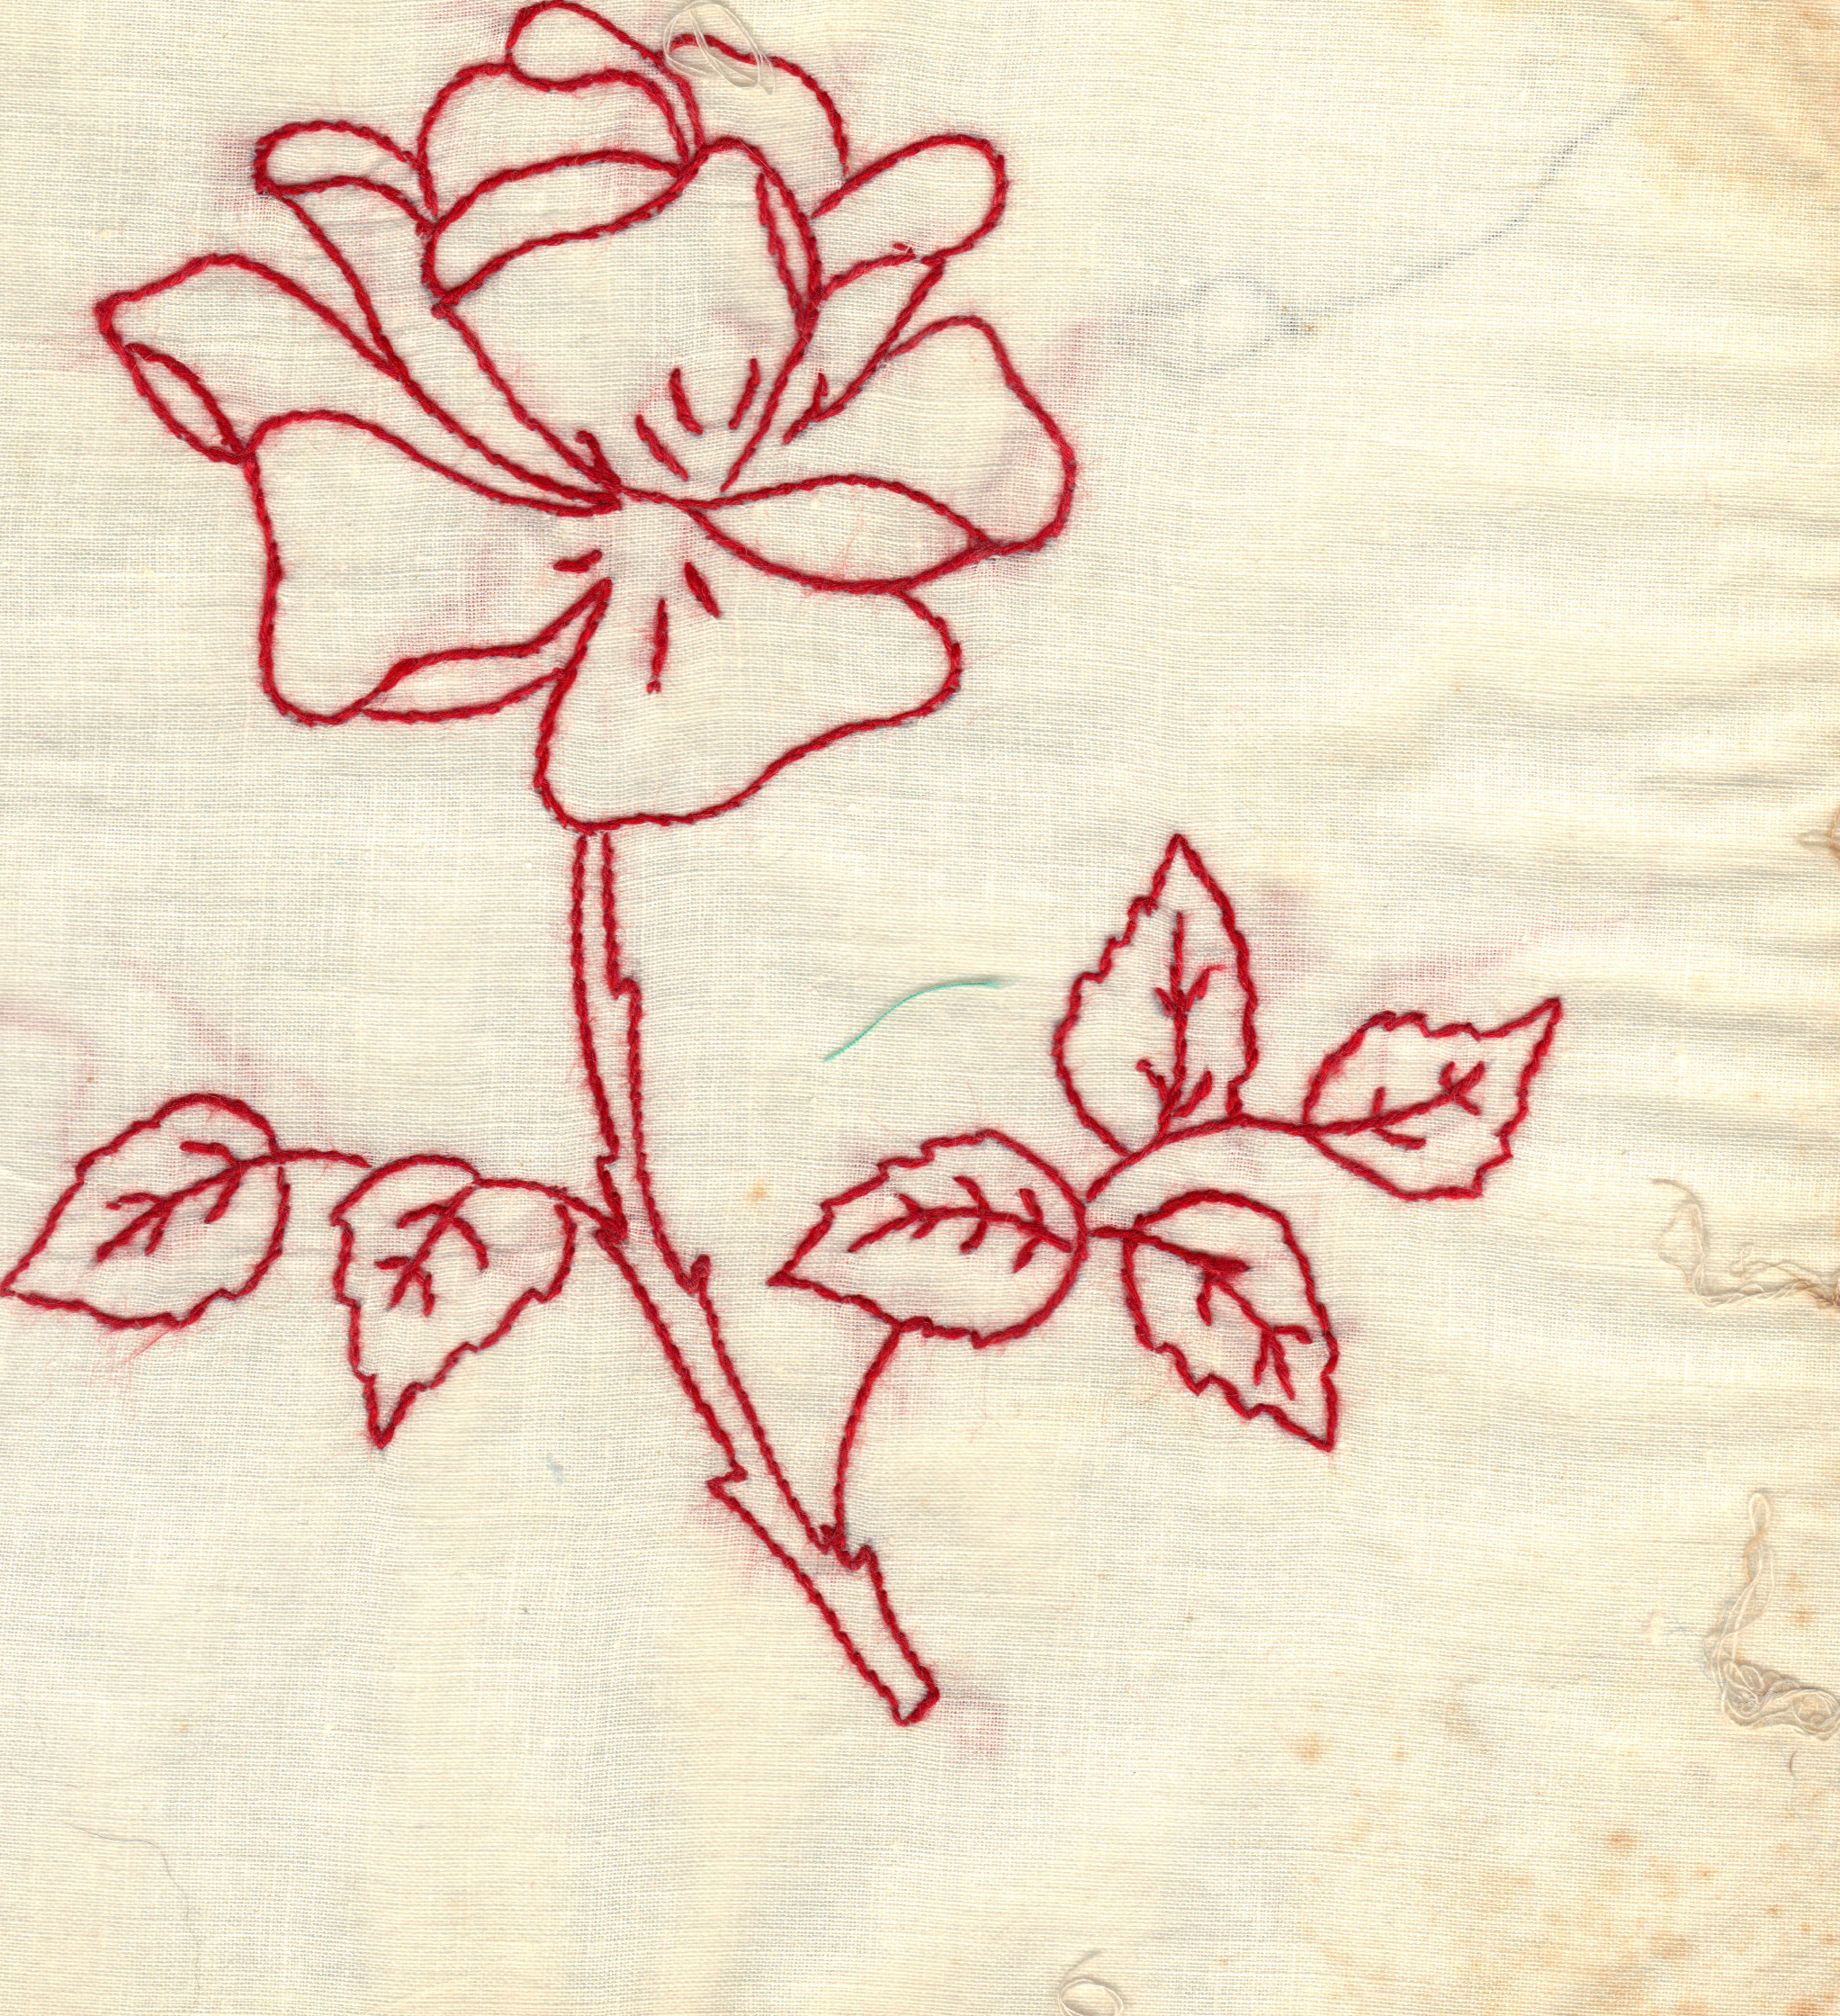 Antique Embroidery Patterns Redworksome Vintage Patterns To Download Tim Latimer Quilts Etc